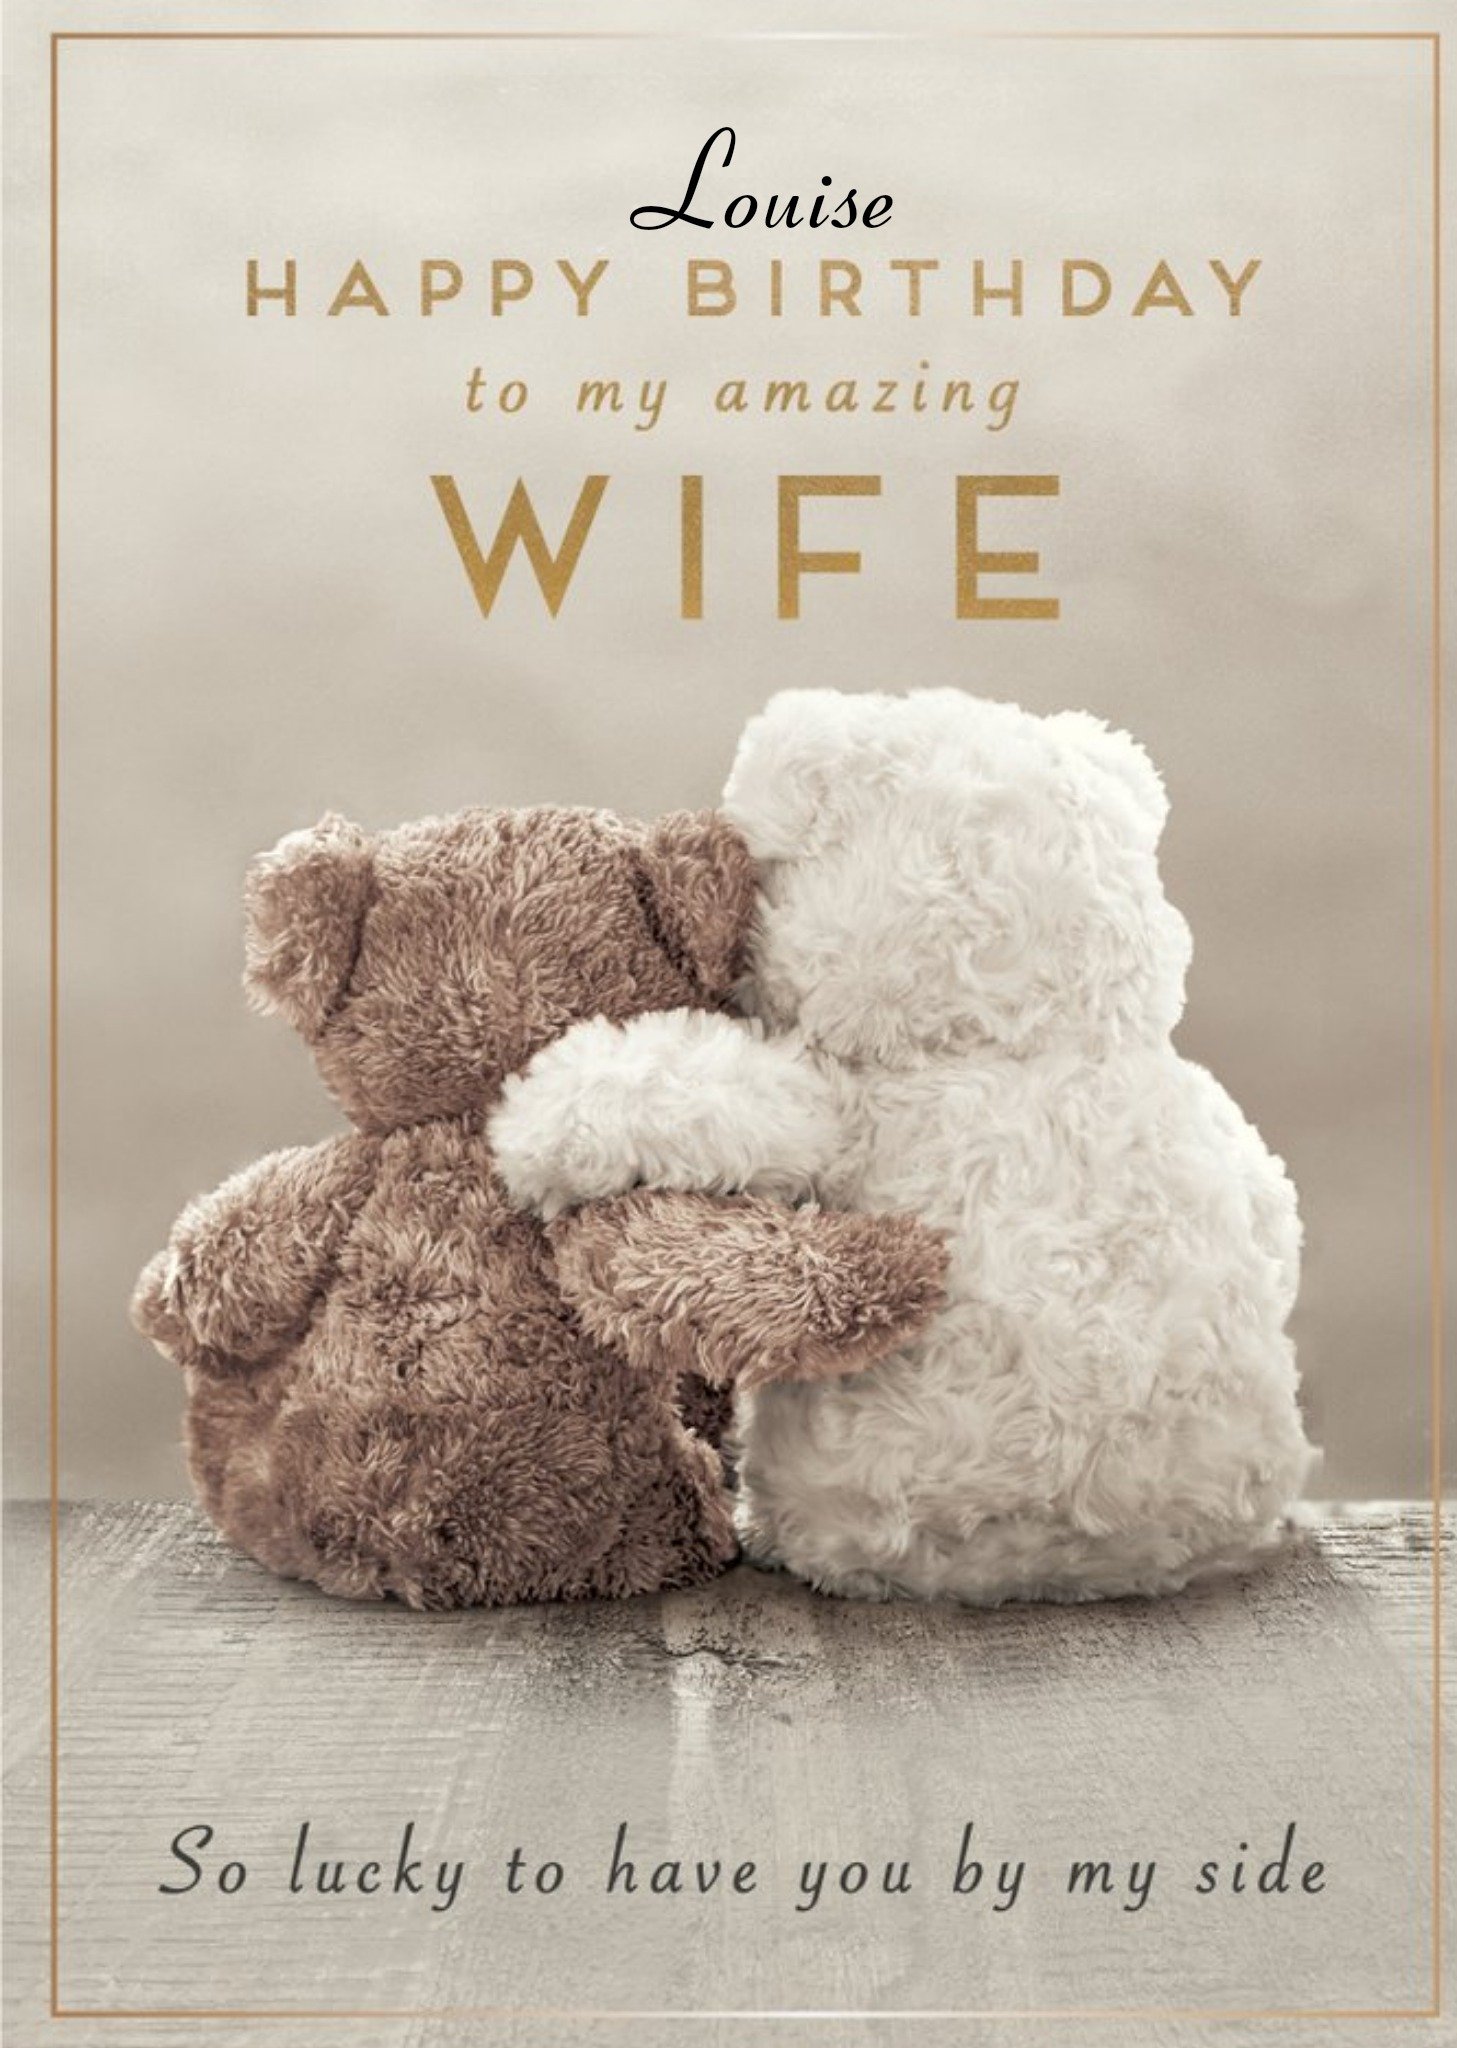 Moonpig Pigment Wife Teddy Bear Birthday Card, Large